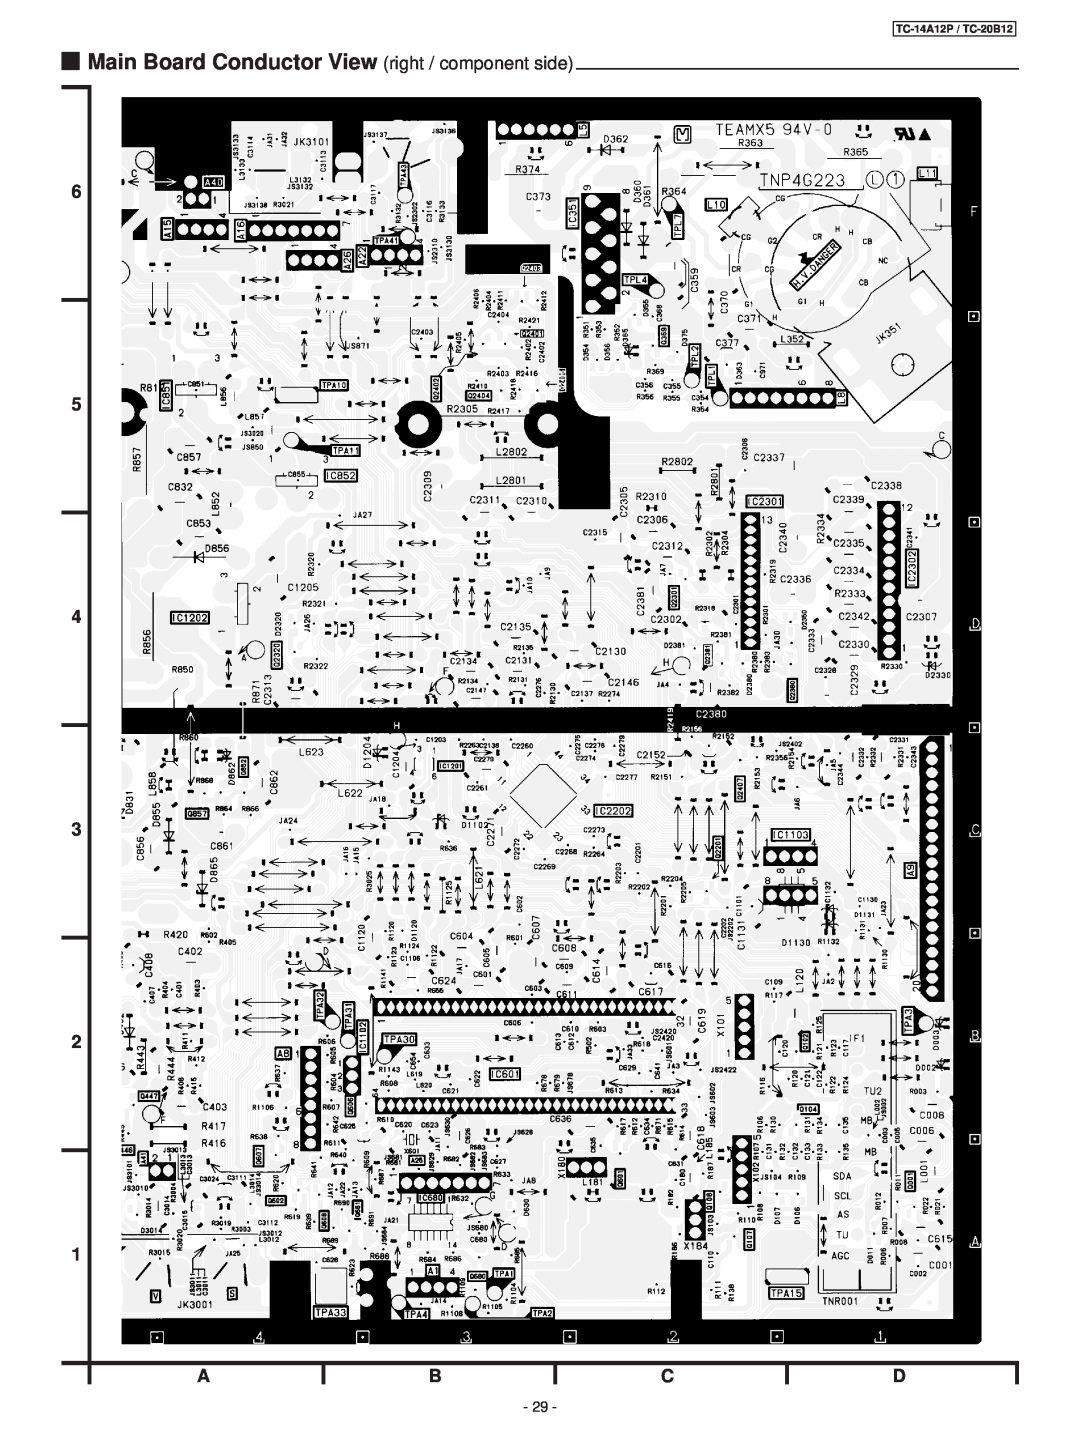 Panasonic service manual Main Board Conductor View right / component side, TC-14A12P / TC-20B12 